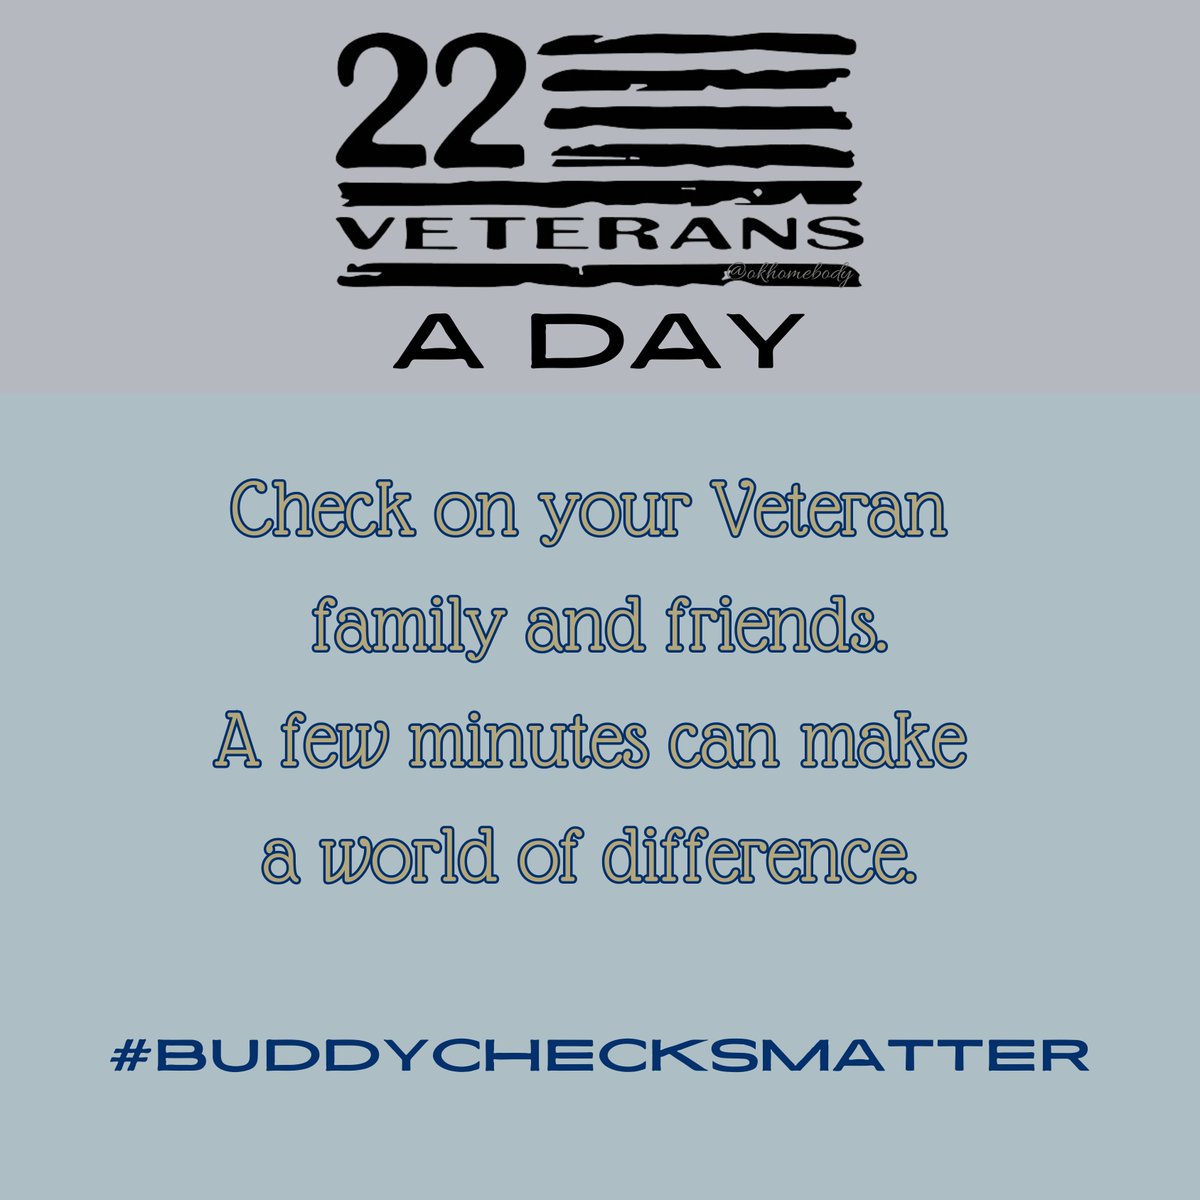 🇺🇸 #ThankfulThursday #Buddy✅with #Veterans 🙏RH
❤️#BuddyChecksMatter because #VeteransLivesMatter❤️
⭐️ 🇺🇸 Repost #EndVeteranSuicide #988press1 🇺🇸⭐️
🇺🇸 @DorianHoward @RightVet23 @abot_no @coheley⚓️
🇺🇸@TomSporty05 @Phat_Greek @MassPatriot1775⚓️
🇺🇸@JackTambroni @JimG65…